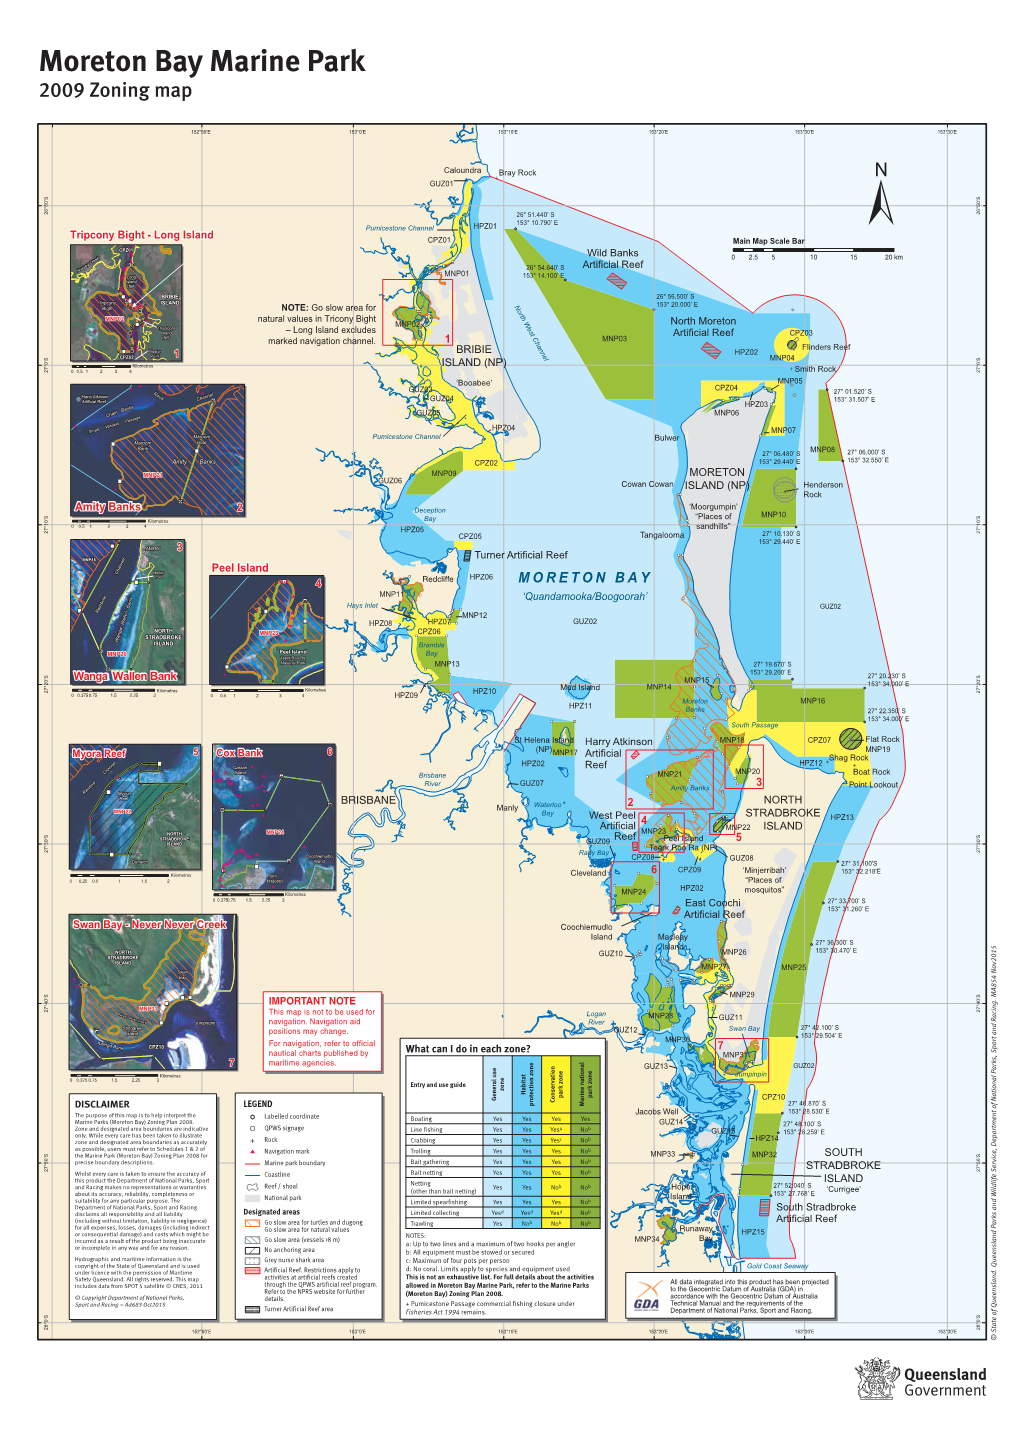 Moreton Bay Marine Park 2009 Zoning Map